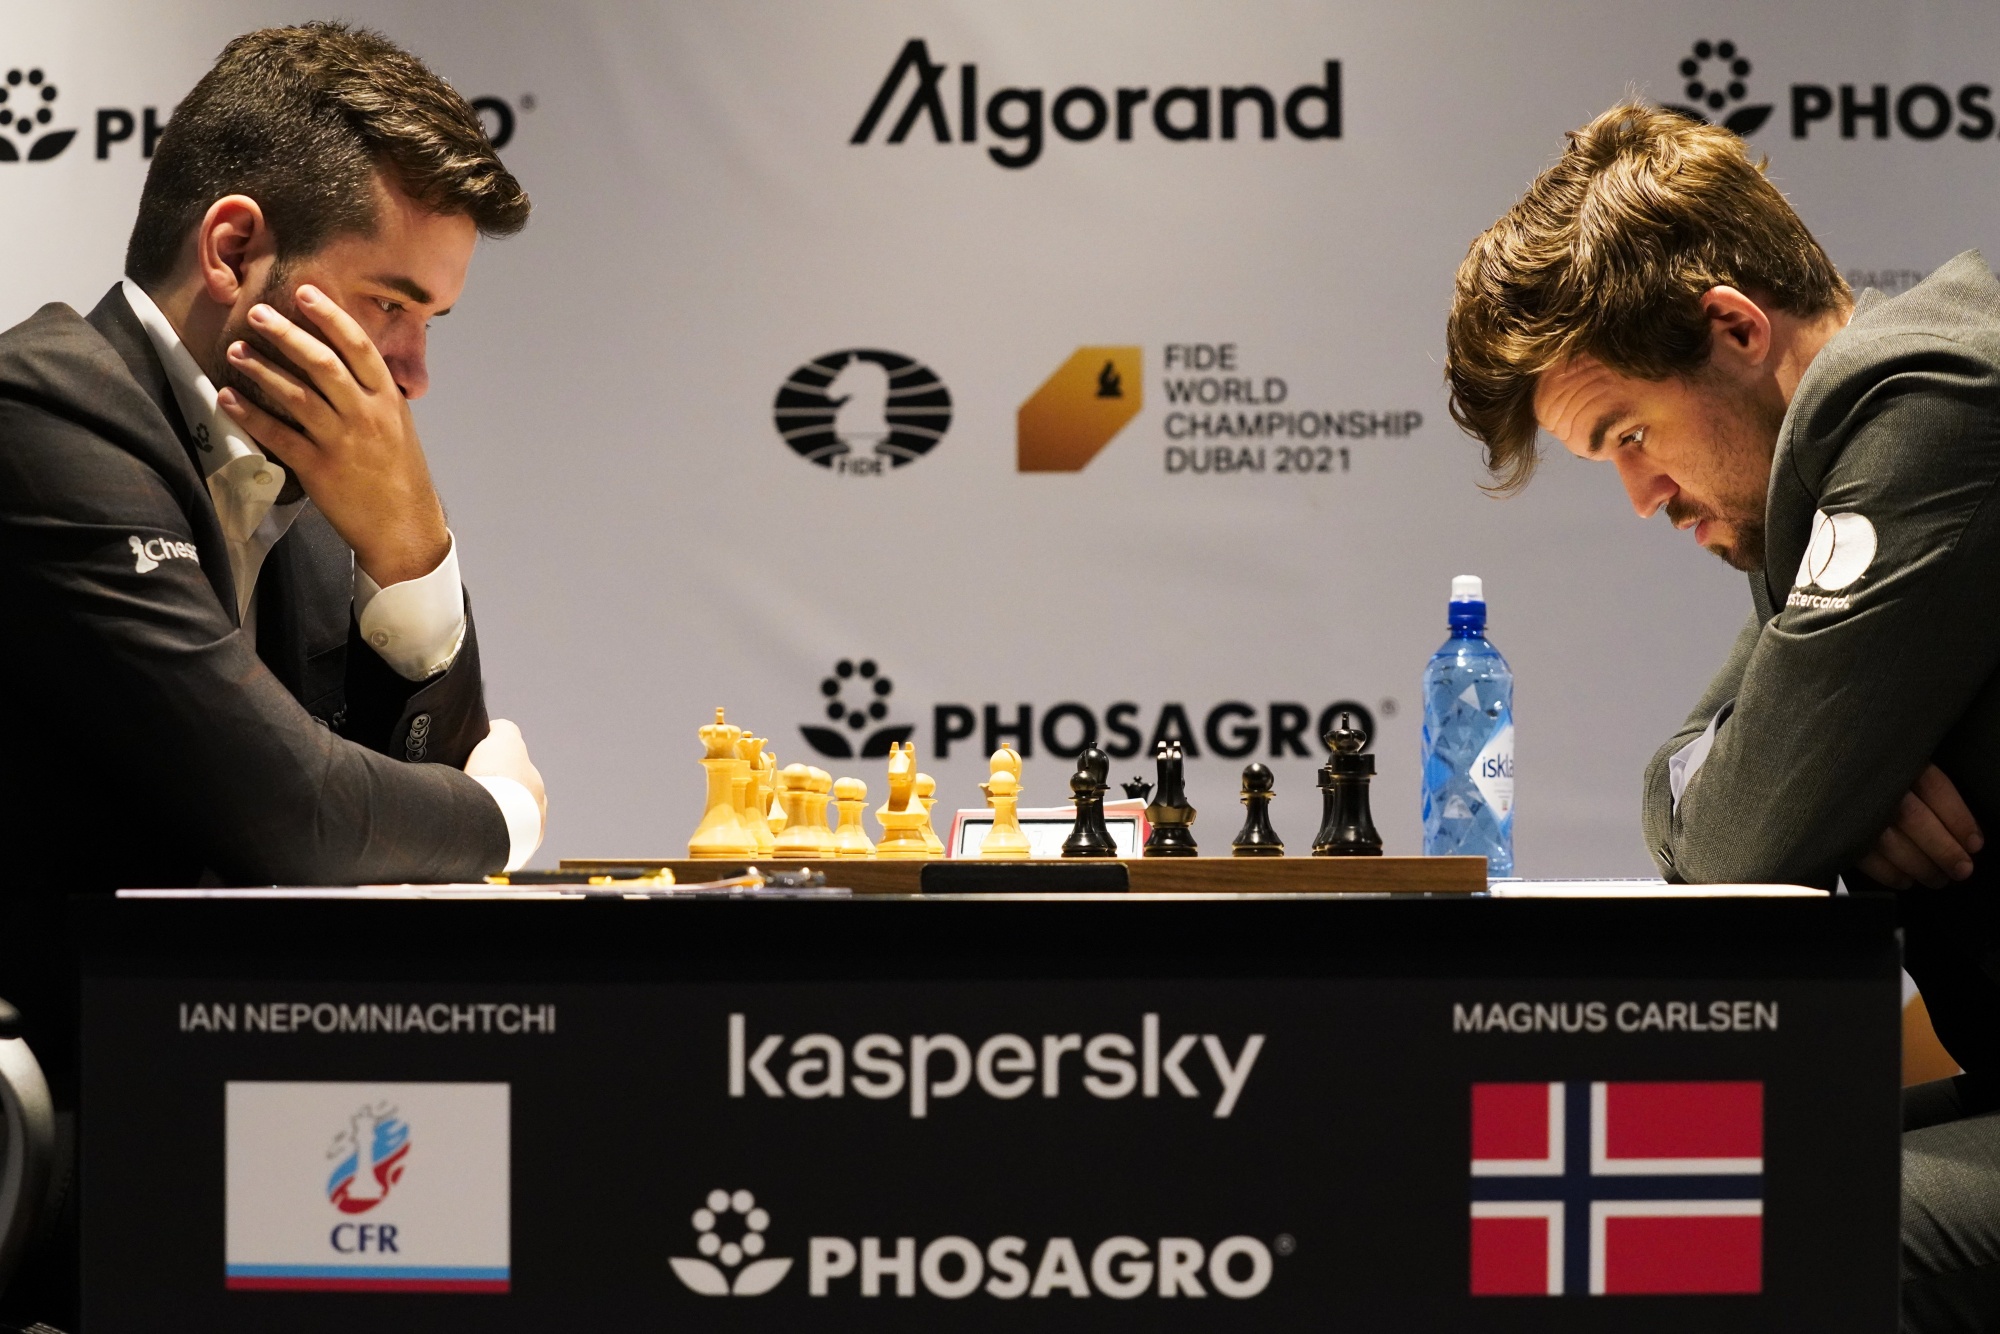 Norway's Magnus Carlsen Wins FIDE World Chess Championship 2021 Bloomberg